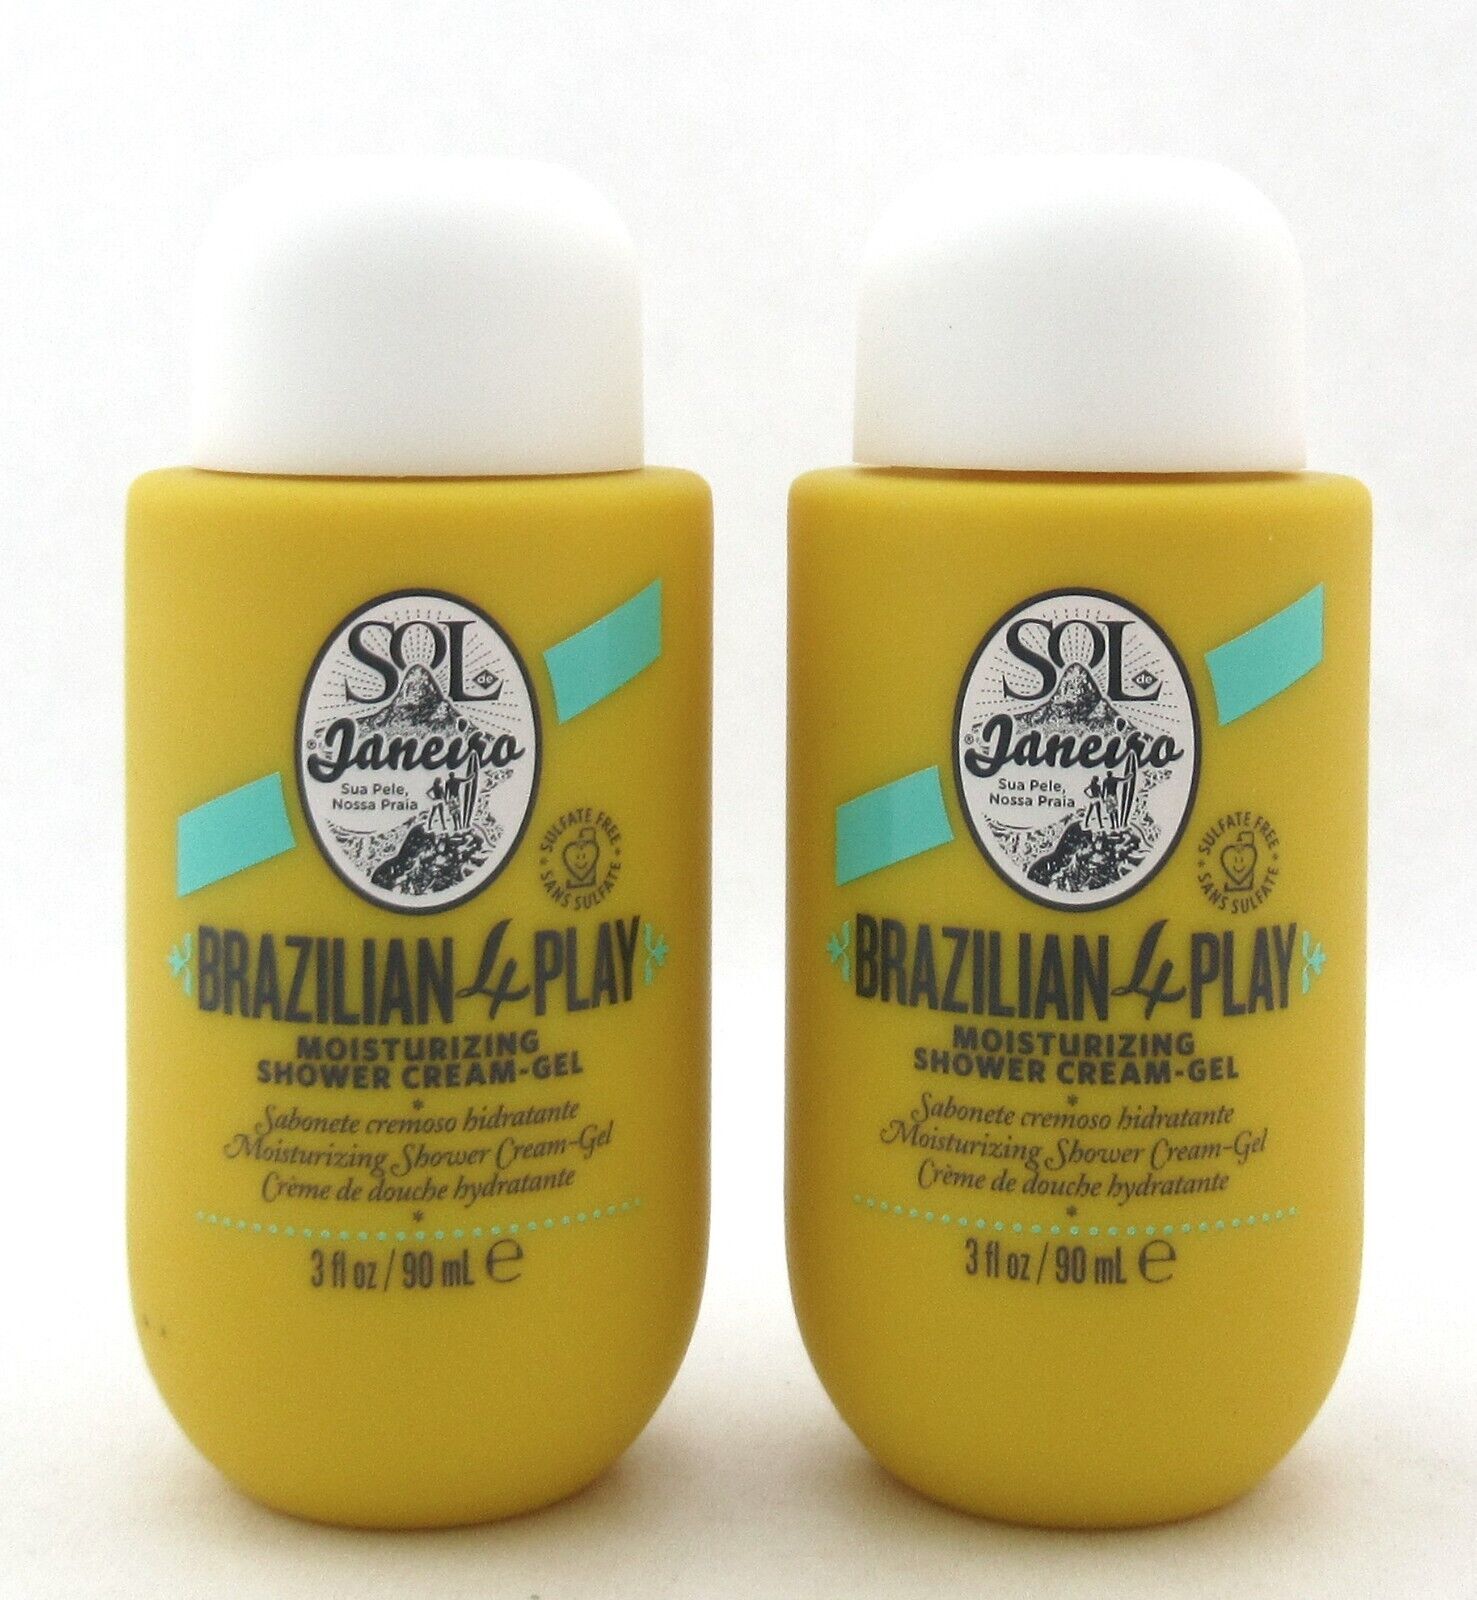 Sol de Janeiro Brazilian 4 Play Moisturizing Shower Cream-Gel 3 oz. Lot of 2 New Sol de Janeiro